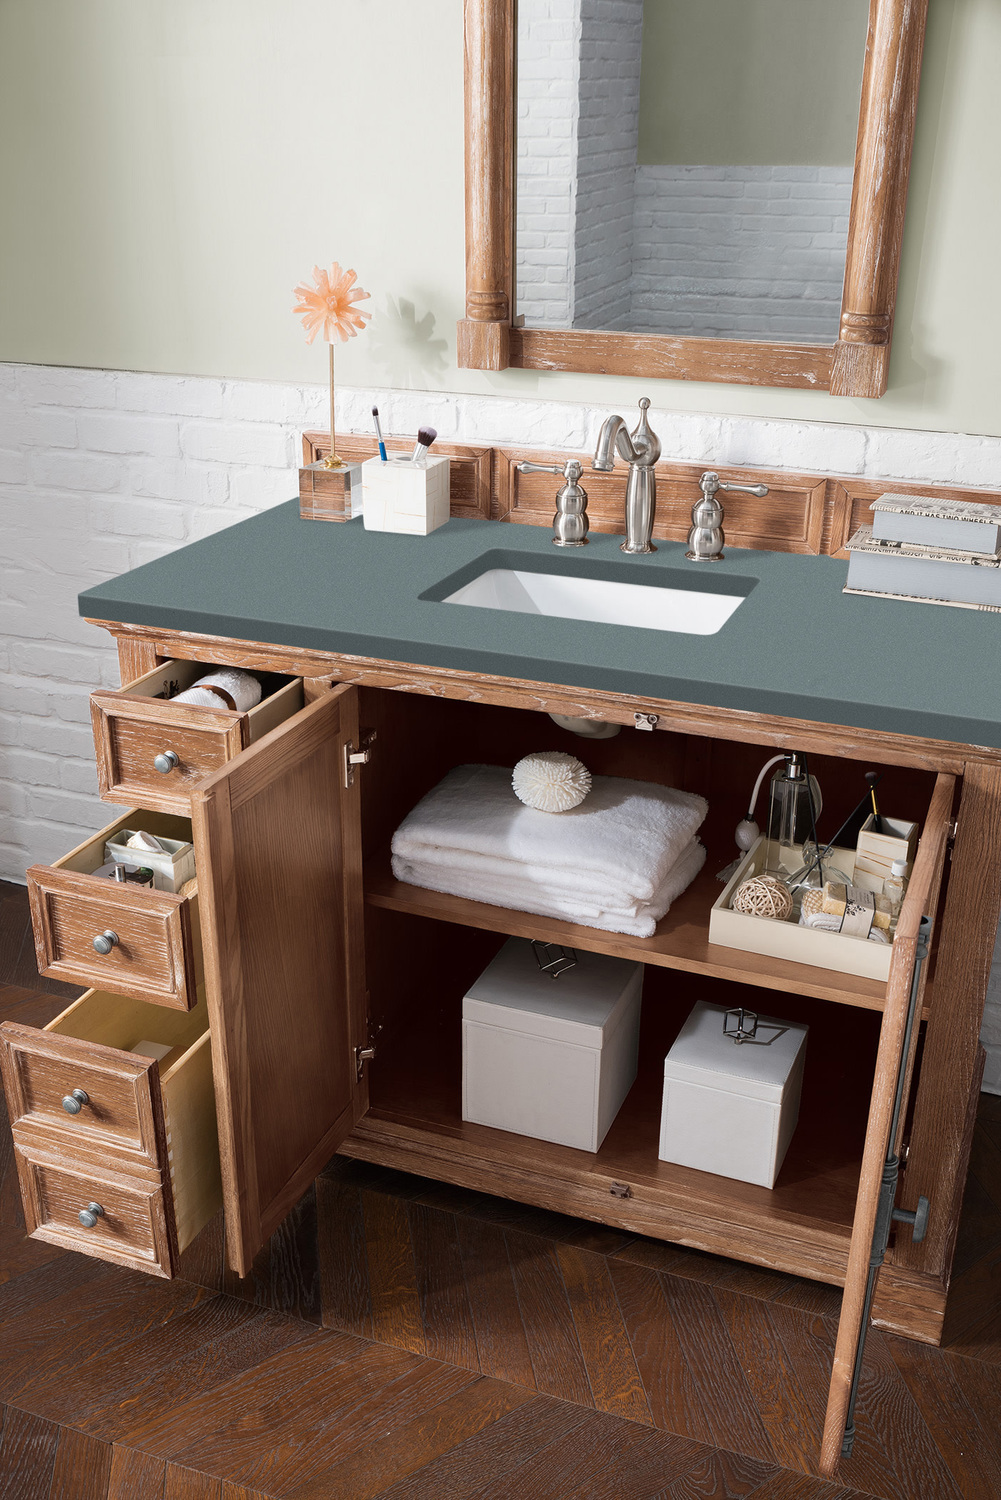 white wooden bathroom cabinet James Martin Vanity Driftwood Transitional